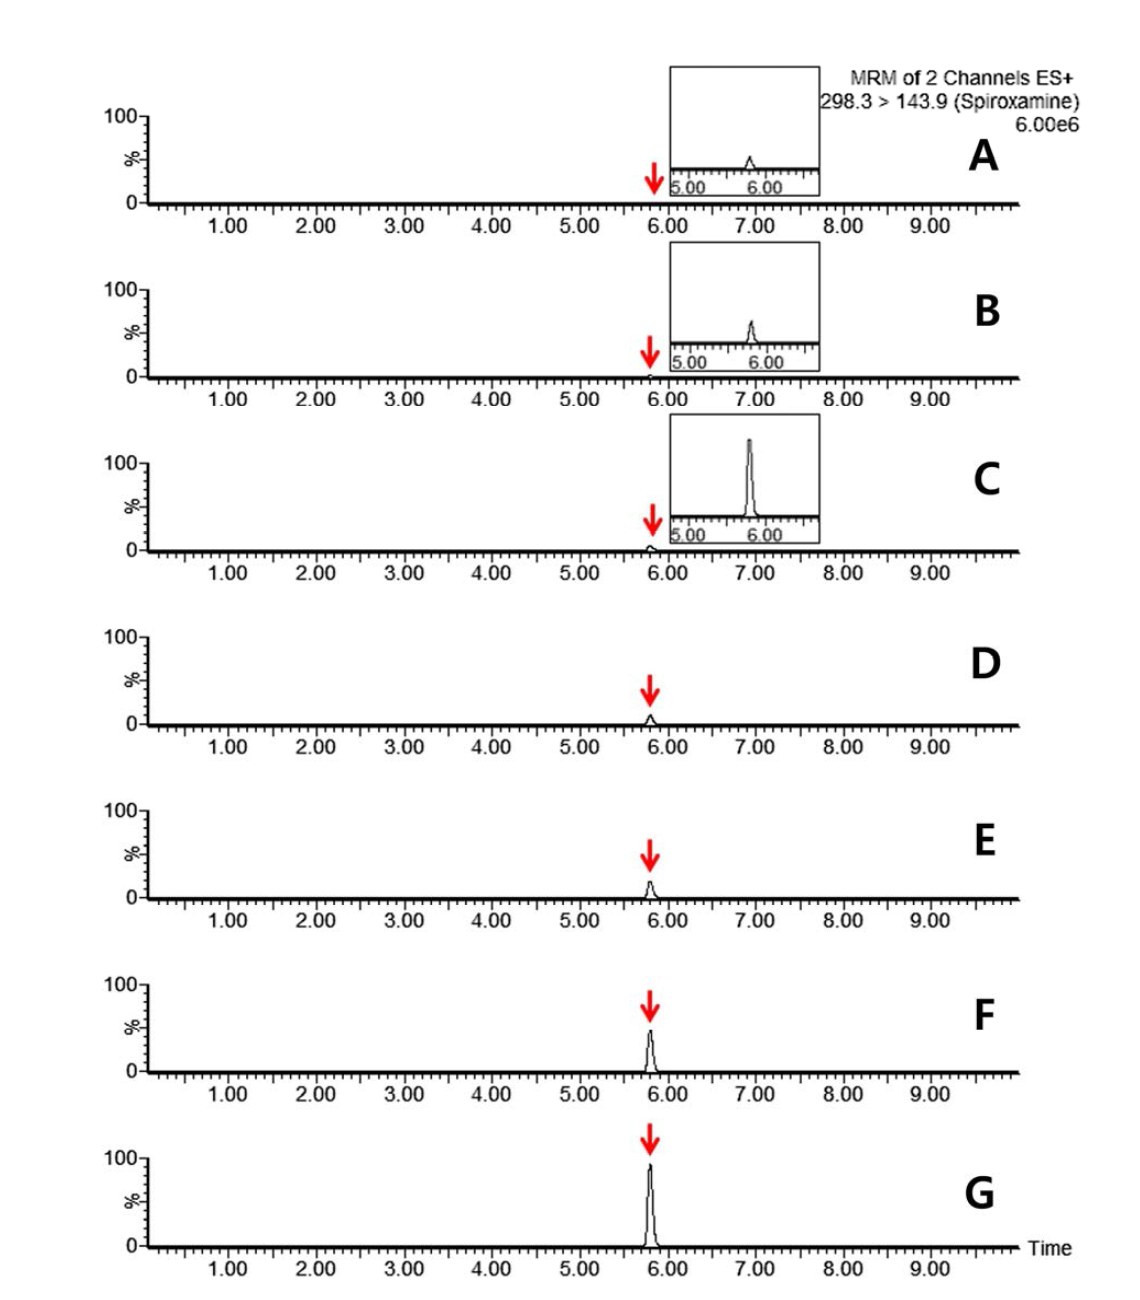 LC-MS/MS chromatograms of spiroxamine standards in hulled rice matrix (A) 0.0005 mg/kg, (B) 0.001 mg/kg, (C) 0.005 mg/kg, (D) 0.01 mg/kg, (E) 0.02 mg/kg, (F) 0.05 mg/kg and (G) 0.1 mg/kg